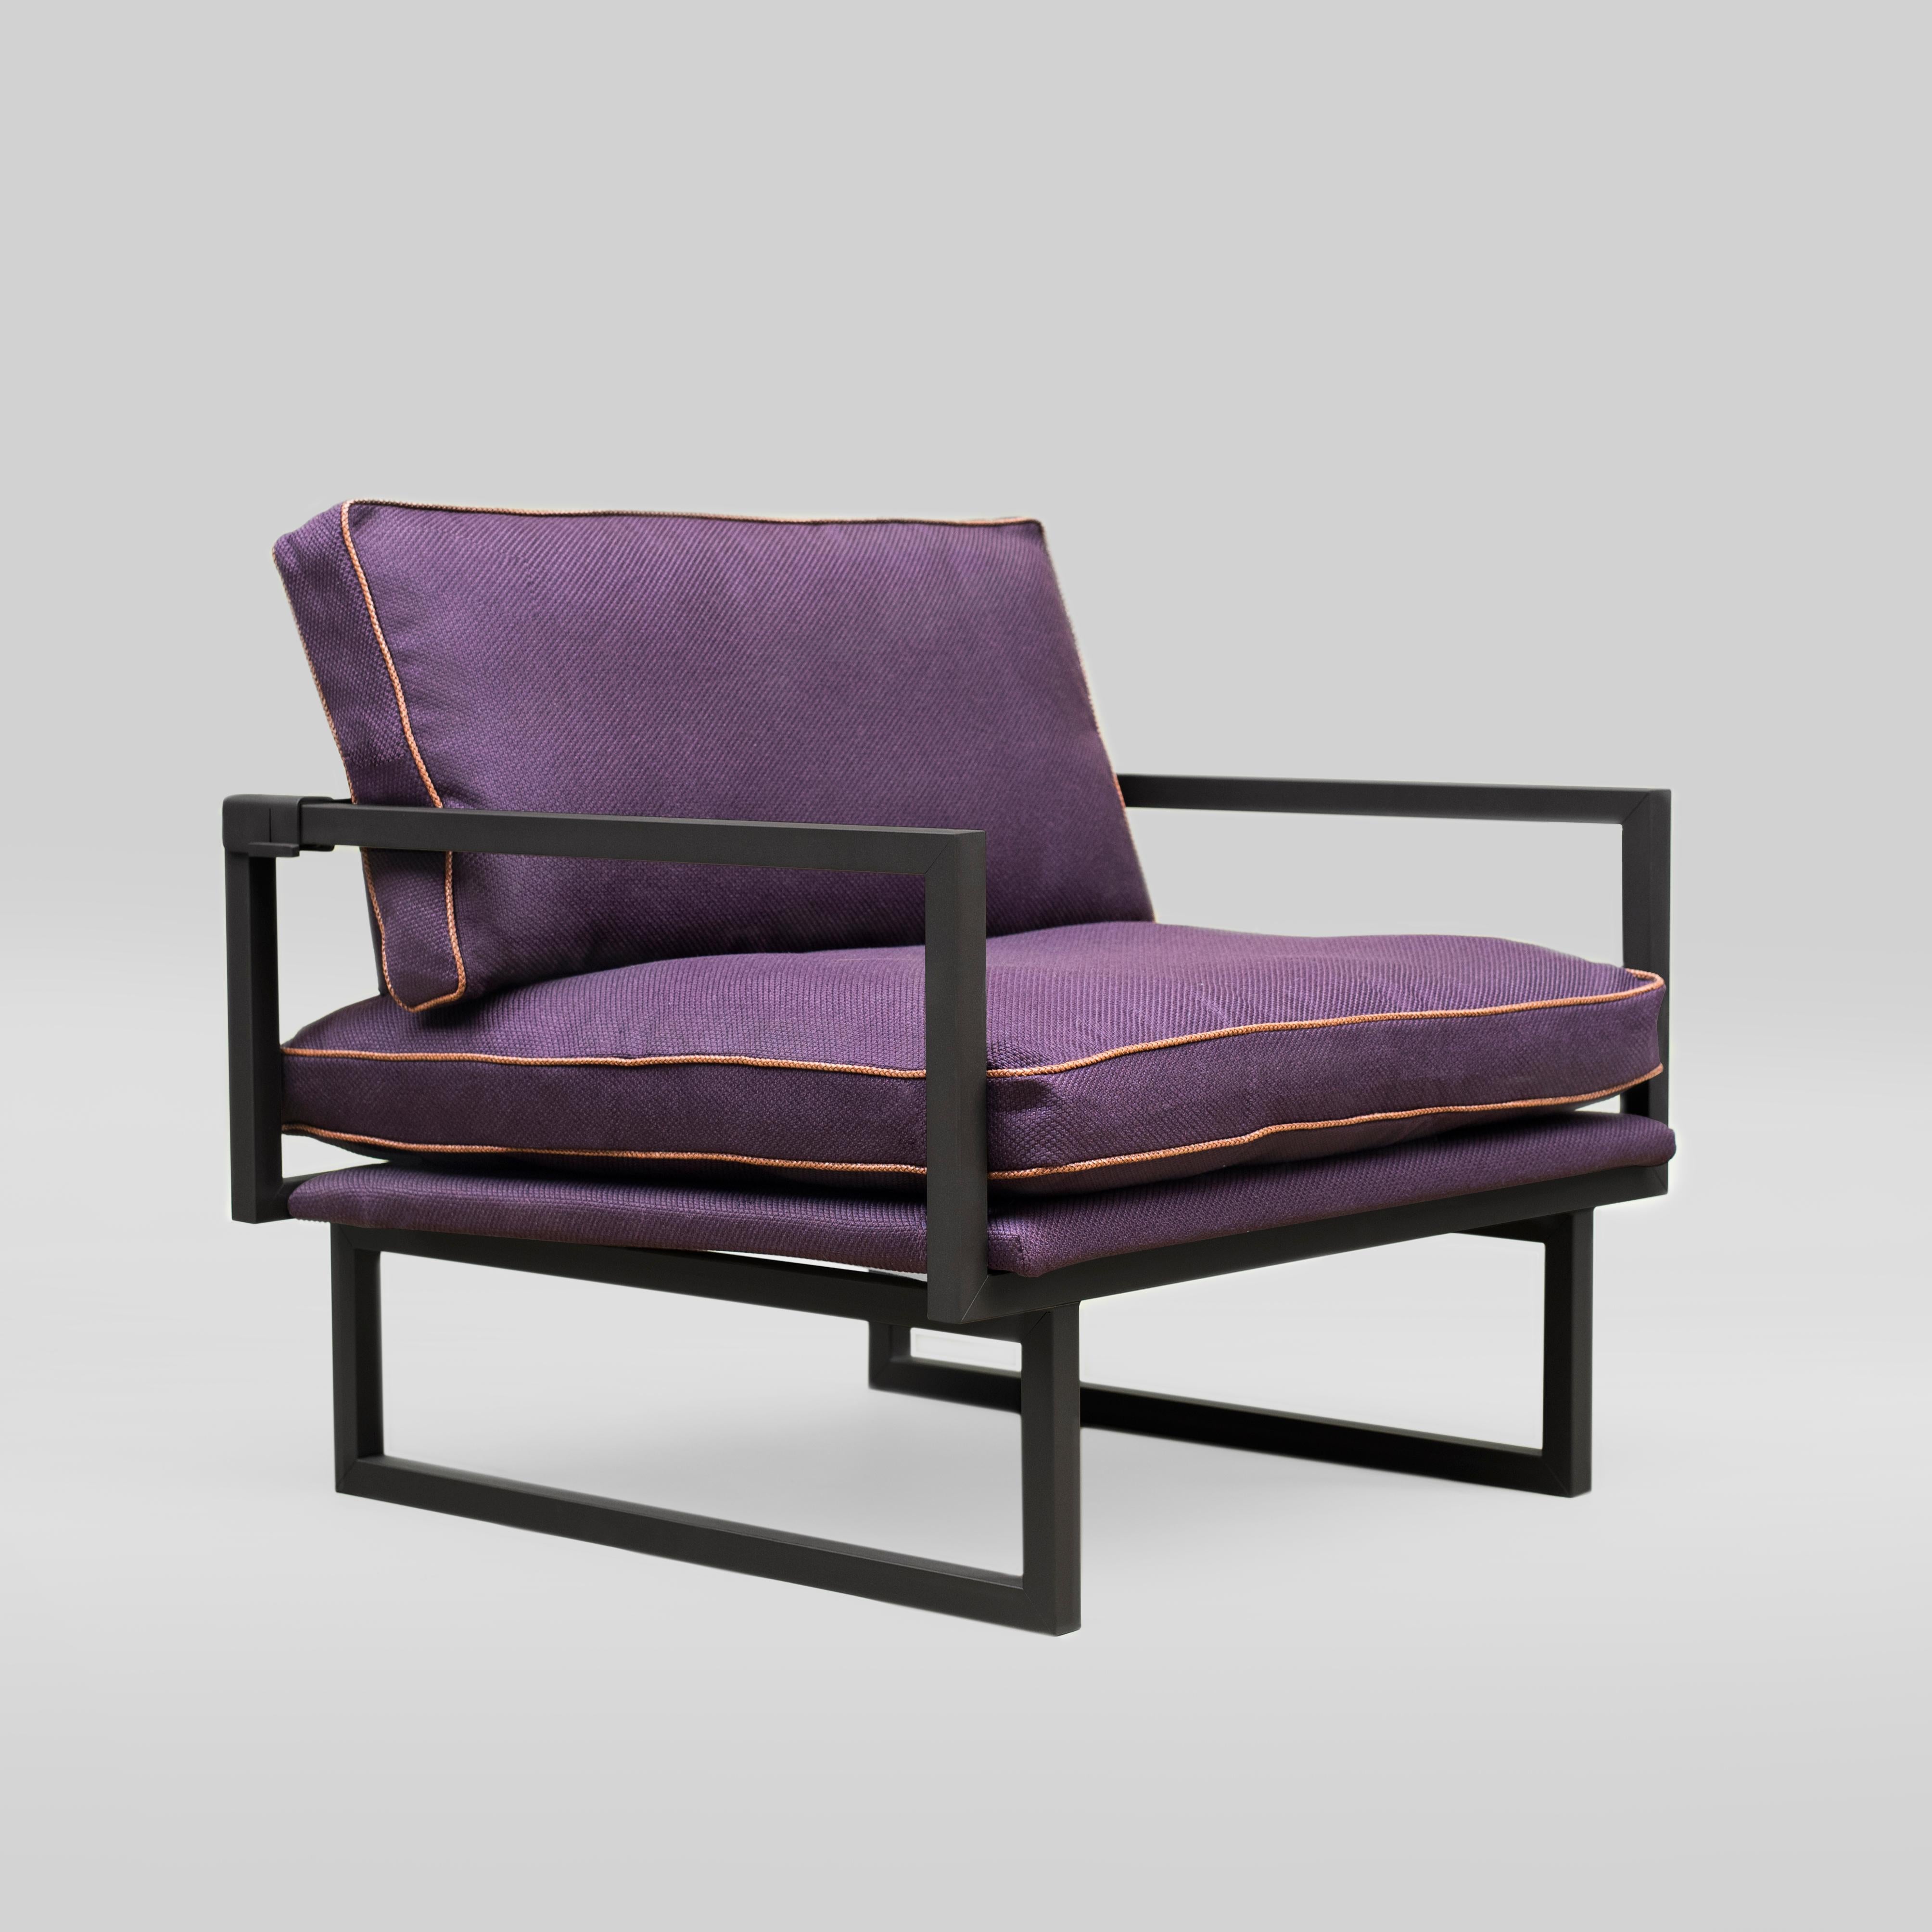 Contemporary Peter Ghyczy Armchair Urban Brad 'GP01' Ristretto or Purple Fabric